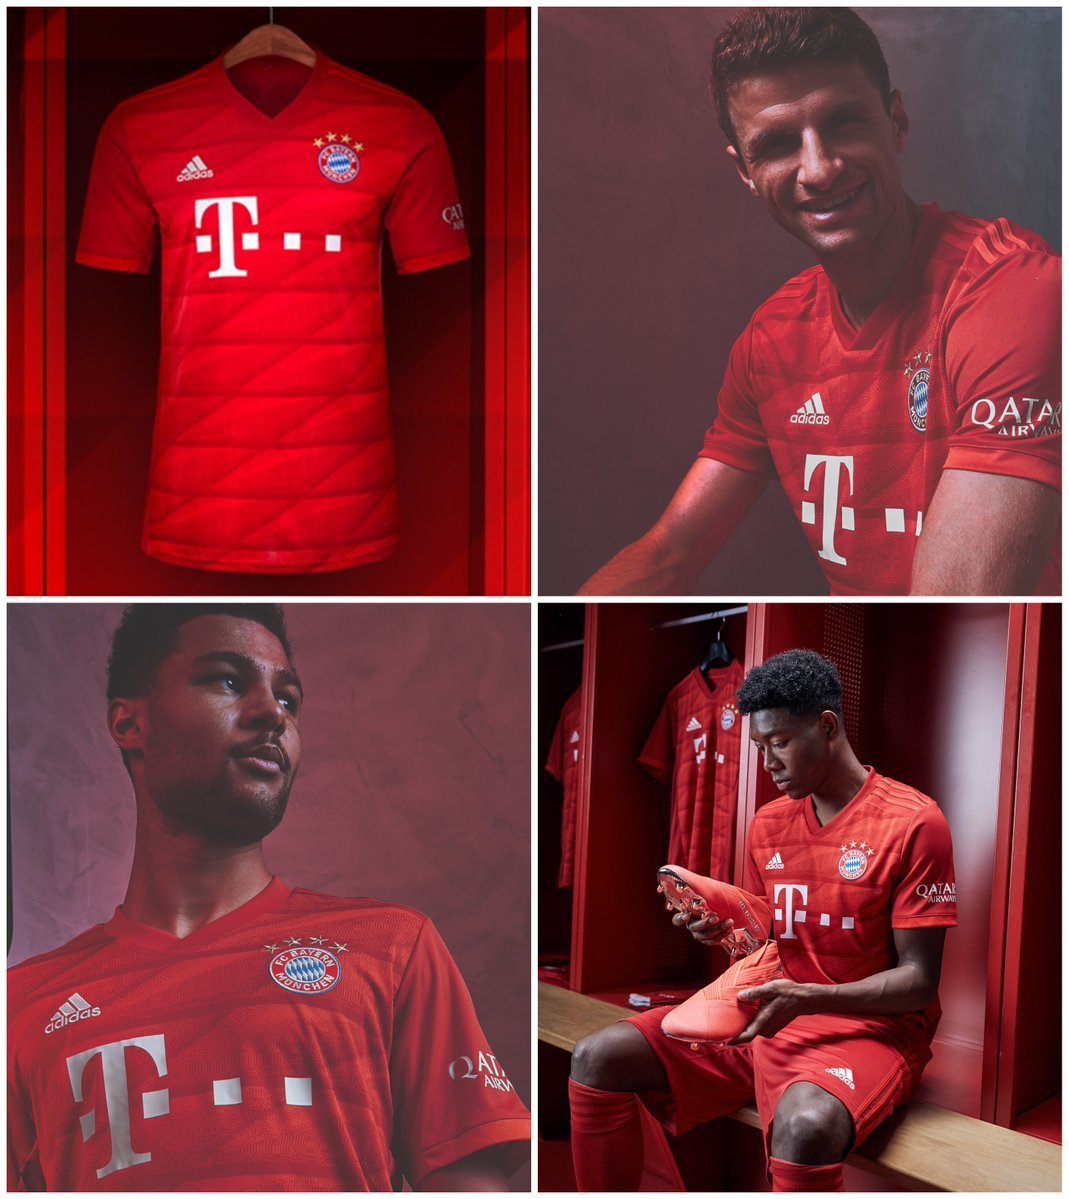 adidas Bayern Munchen 2019-20 Kit